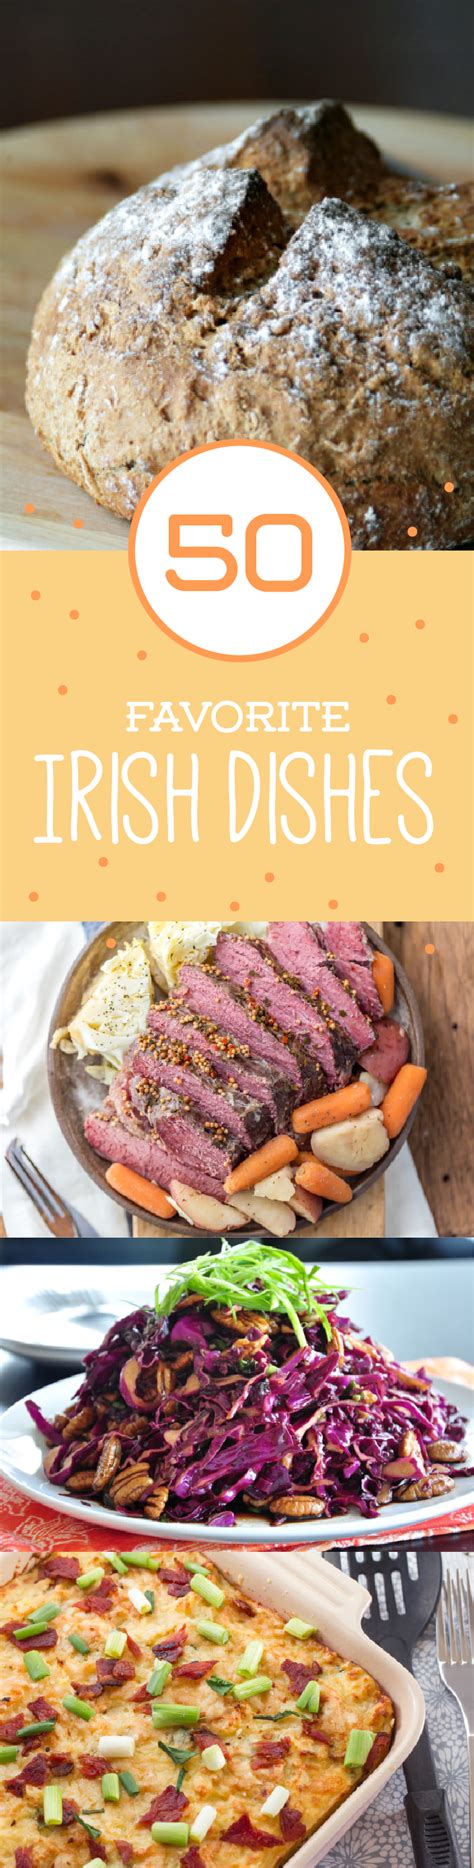 70 Traditional Irish Recipes Authentic Irish Food For St Patricks